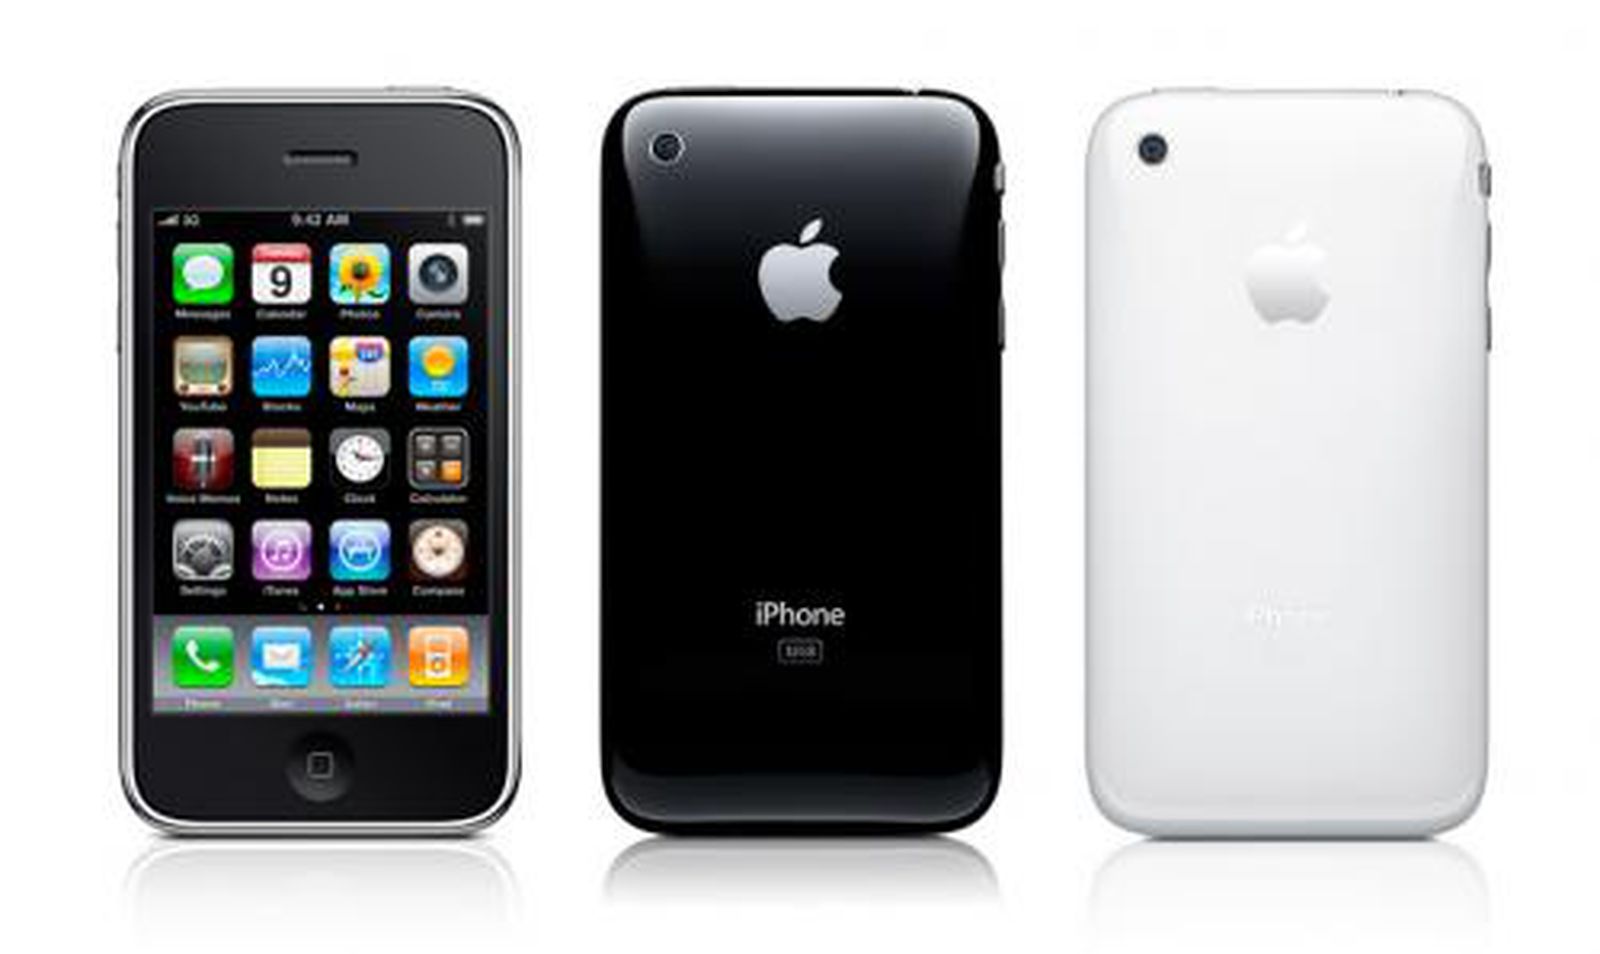 iphone 3gs 2009